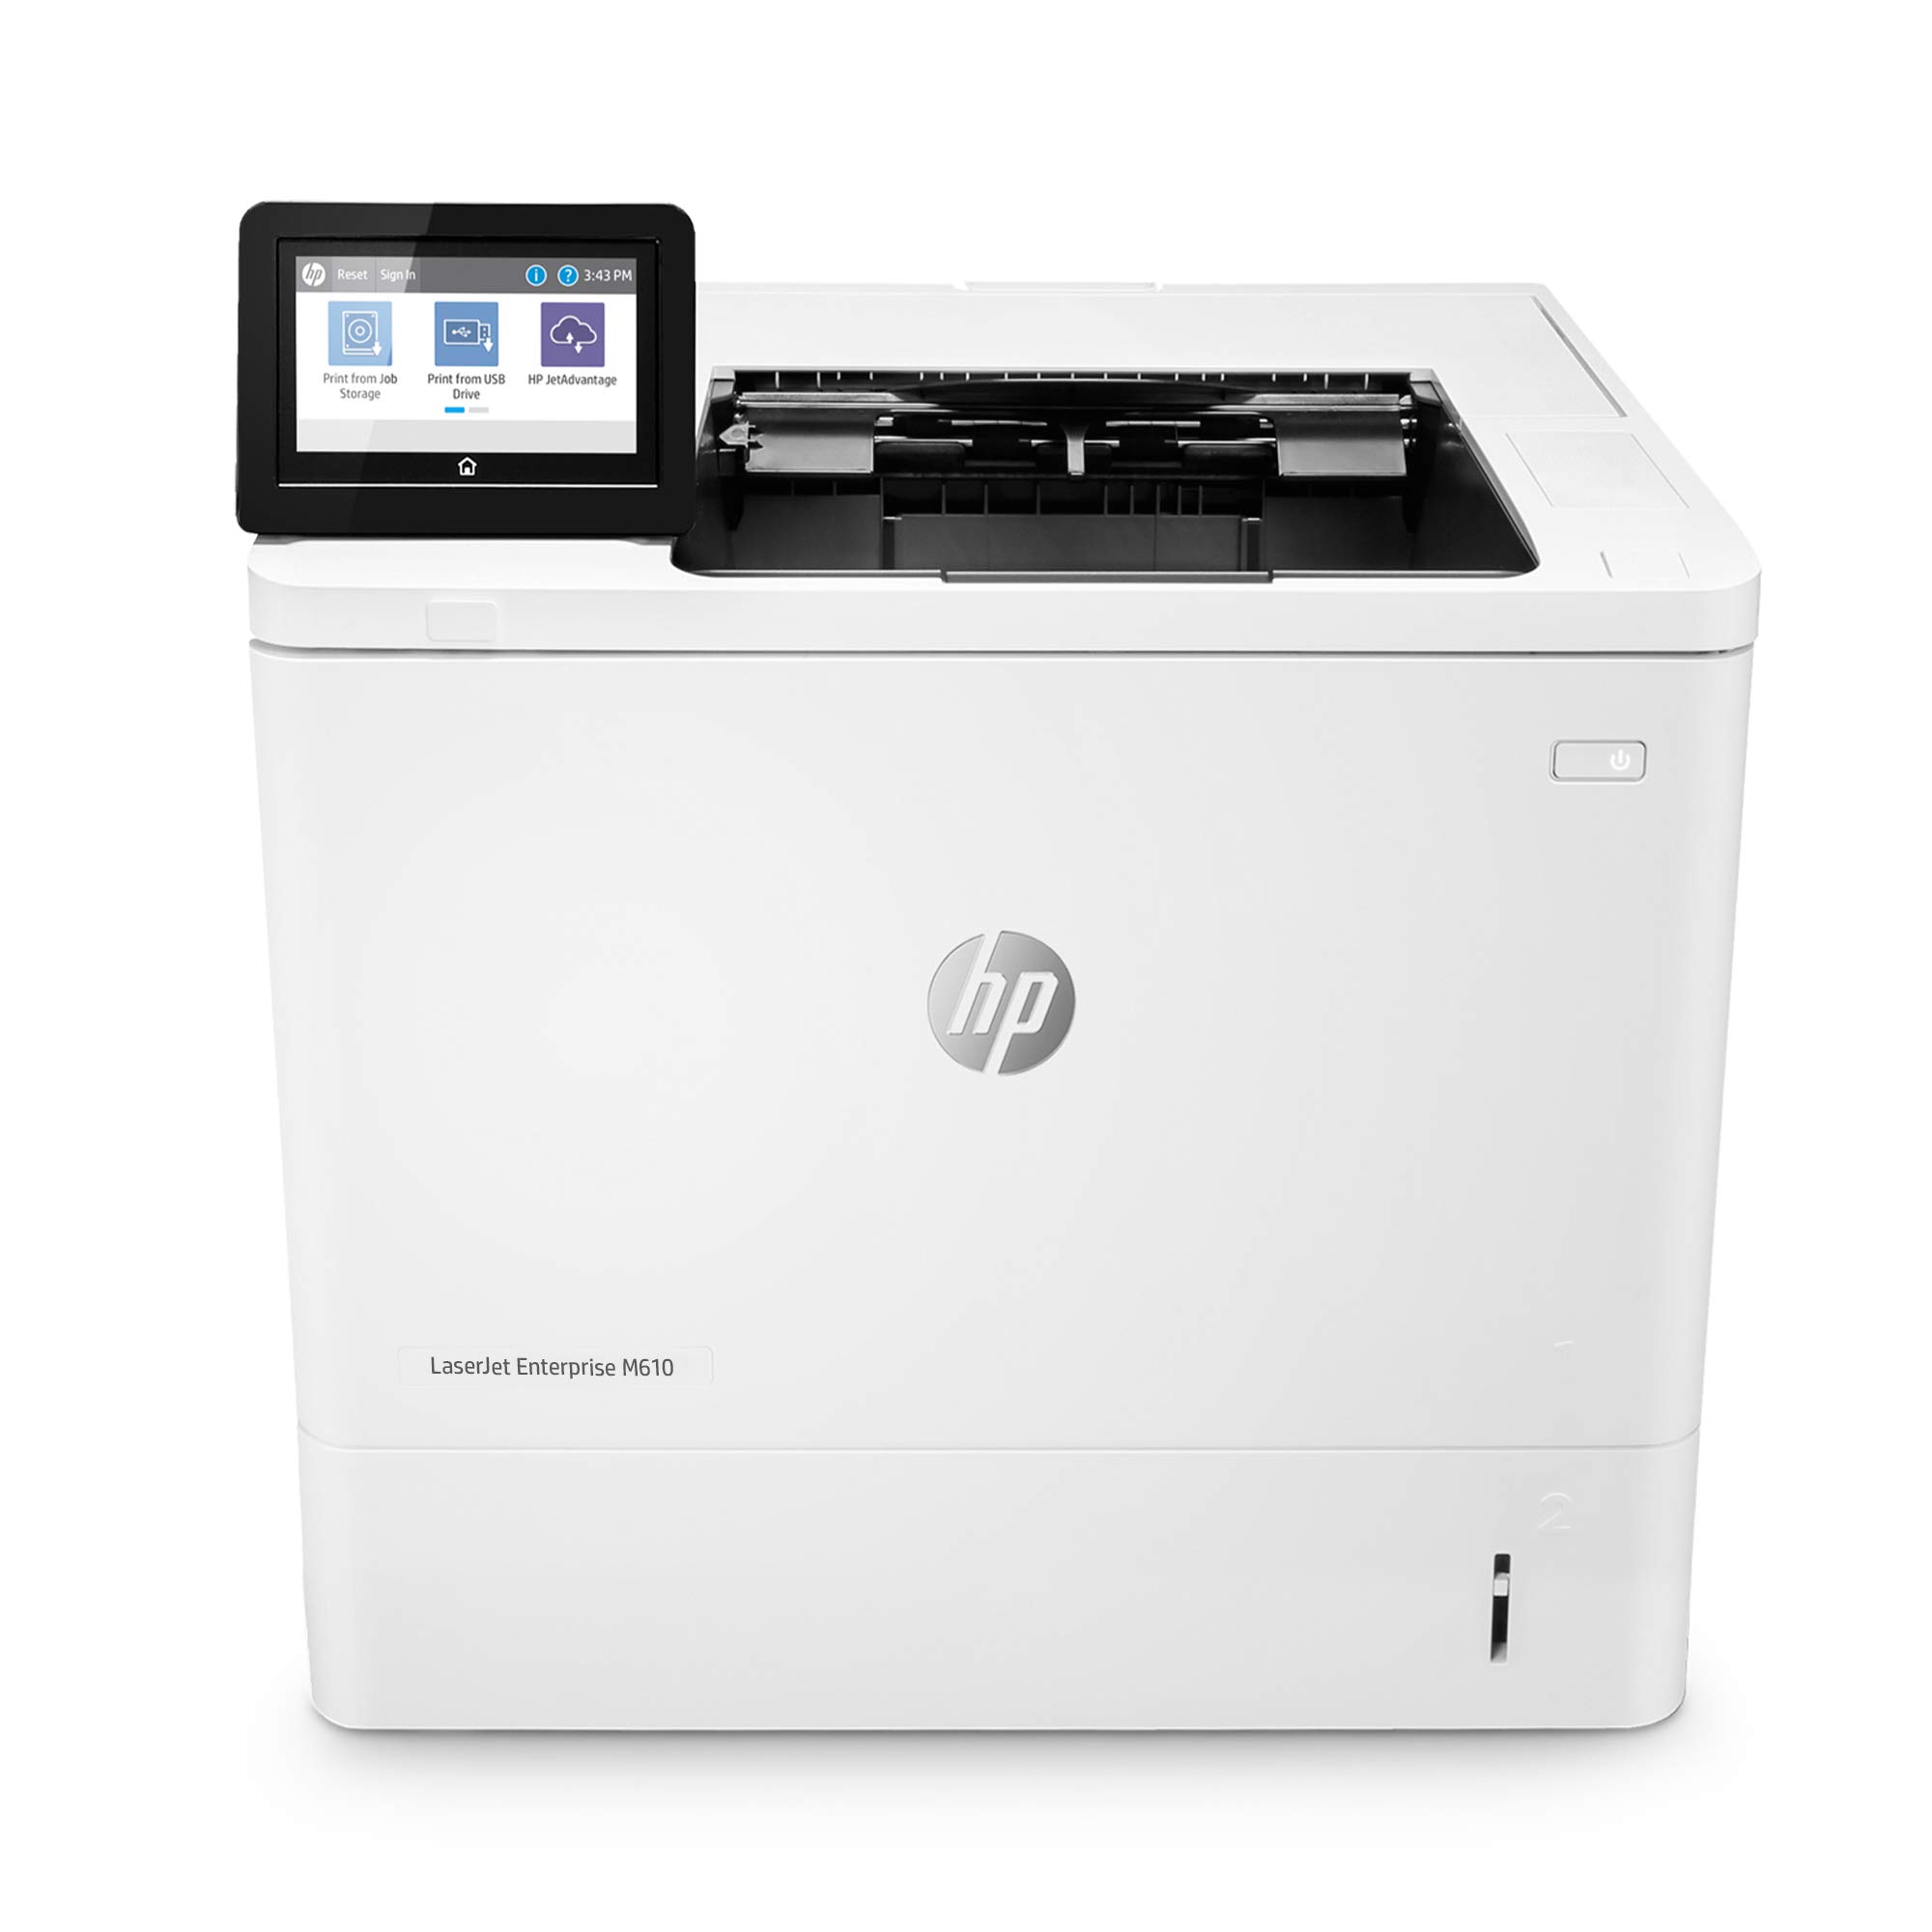 HP LaserJet Enterprise M610dn 内蔵イーサネットおよび両面印刷機能付きモノクロ プリンタ (7PS82A)